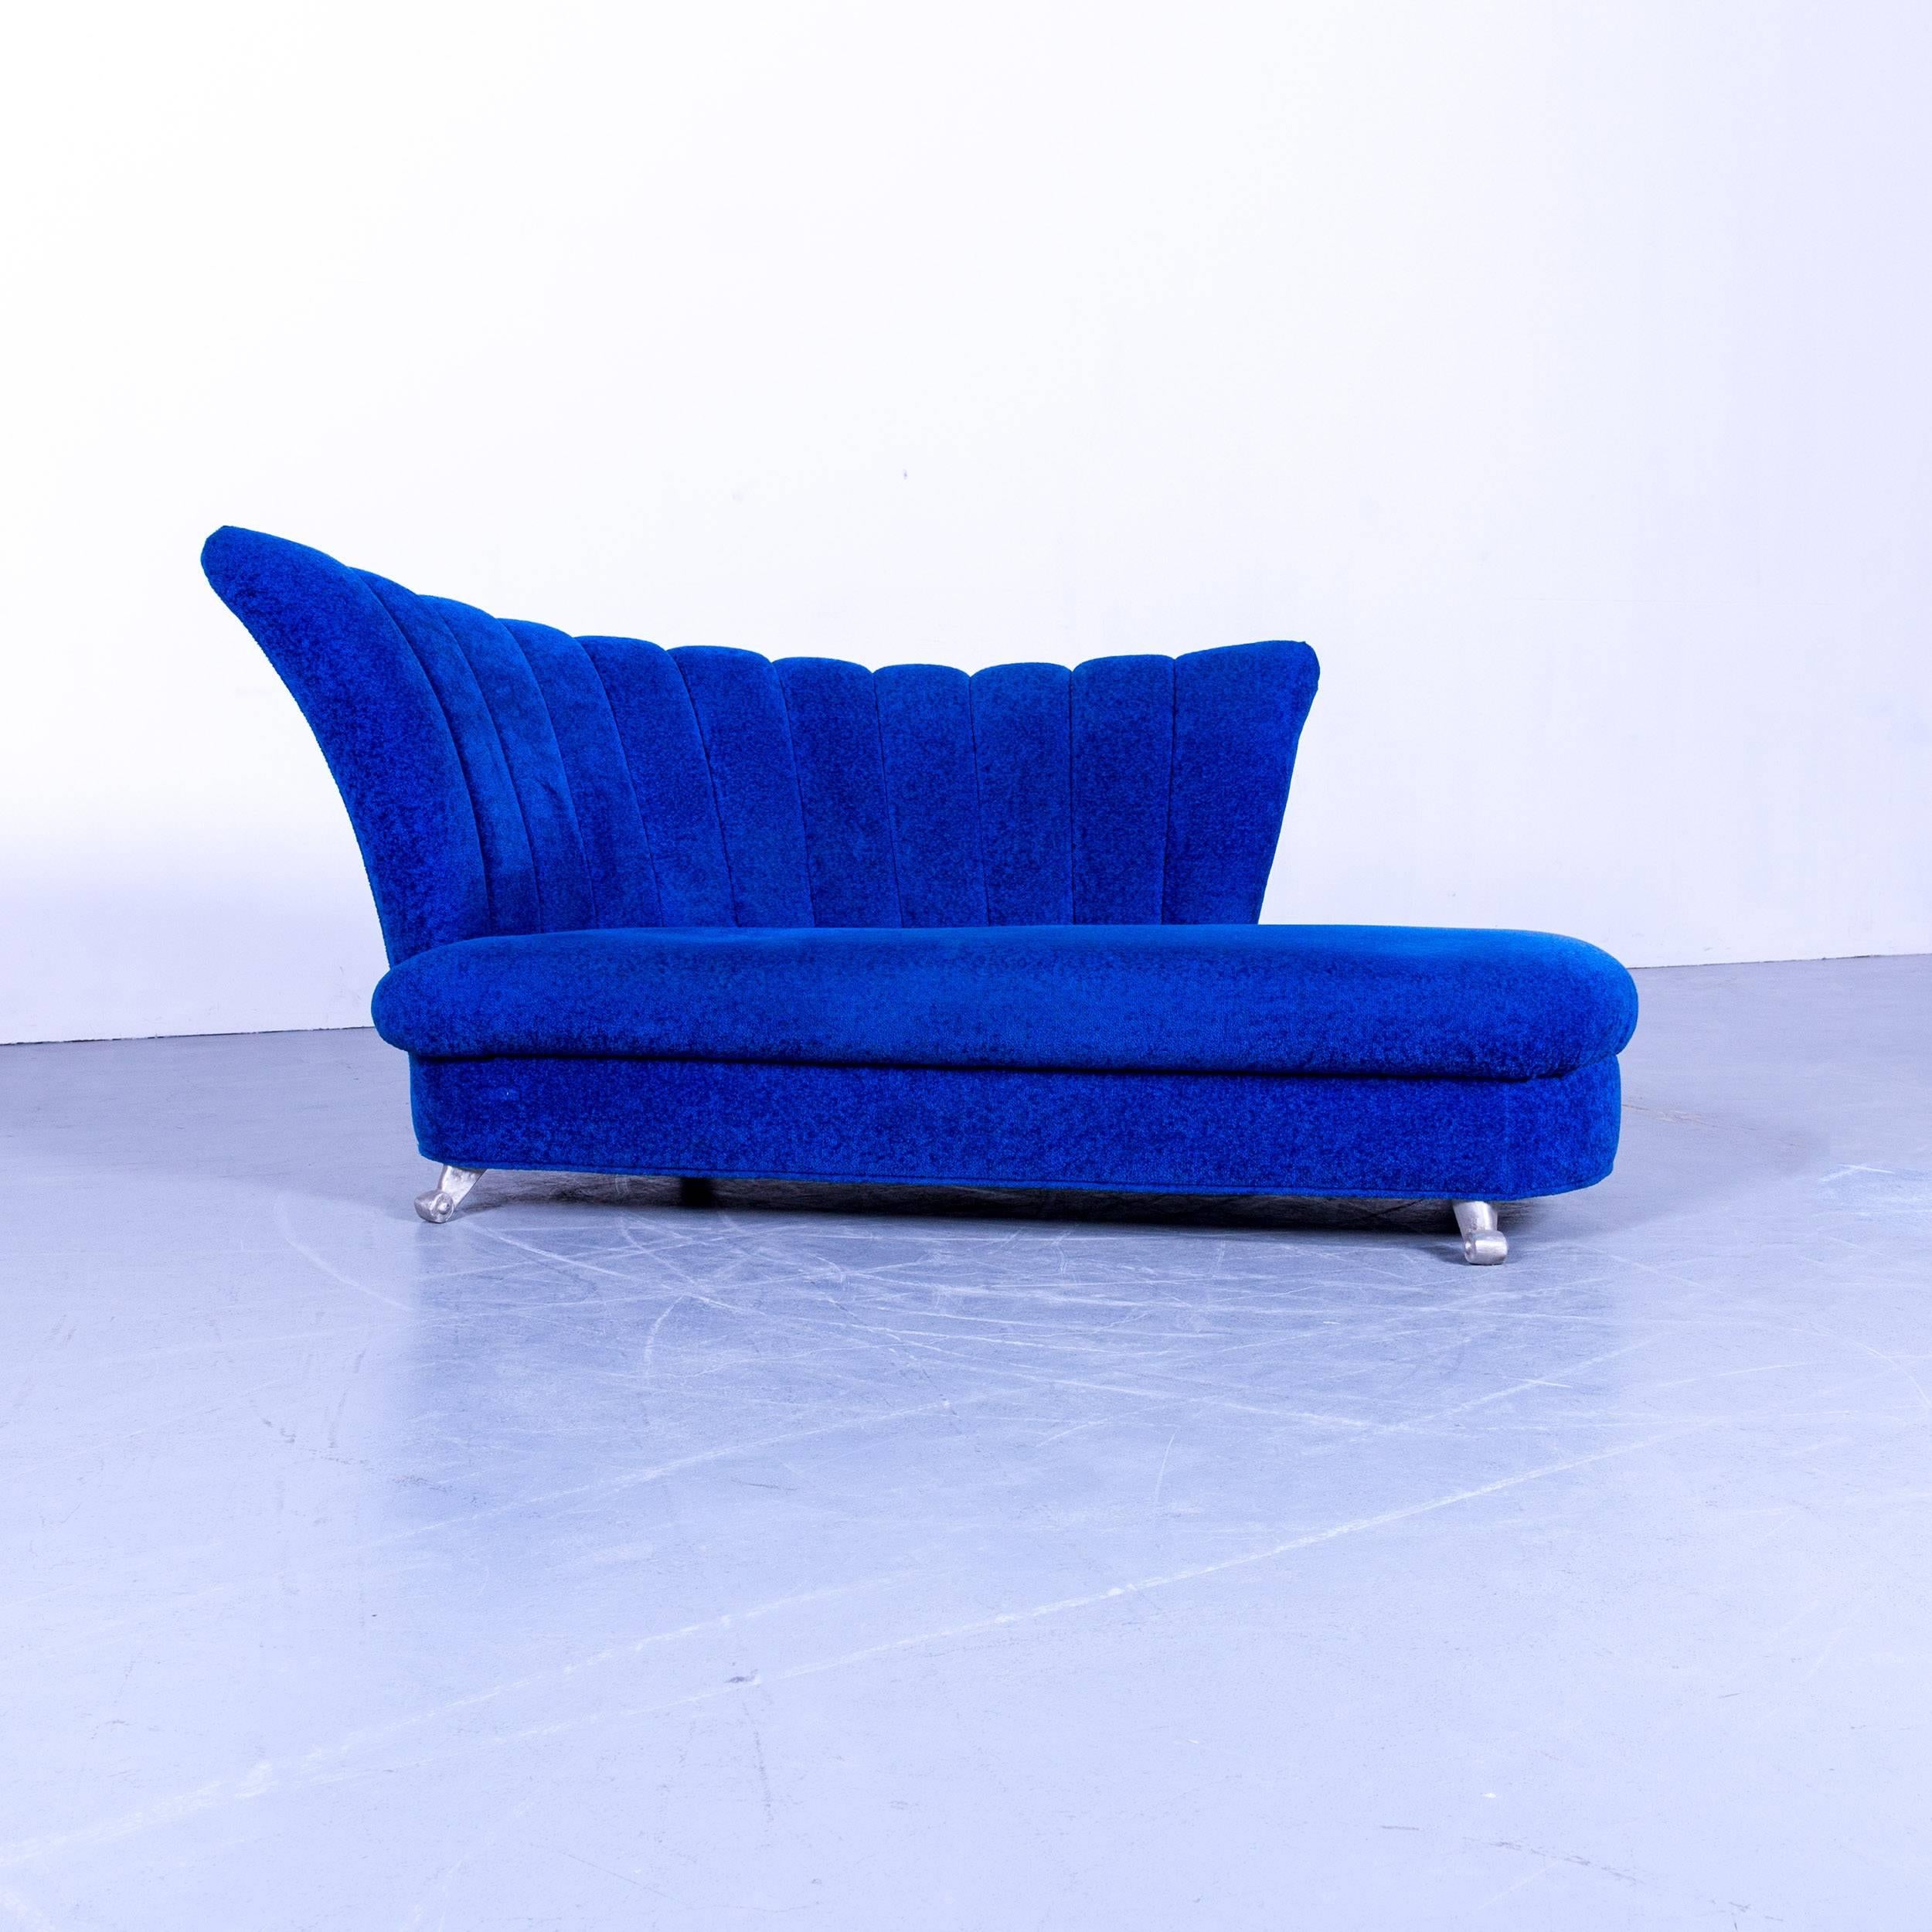 Blue colored original Bretz designer sofa, in an elegant design, made for pure comfort and style.